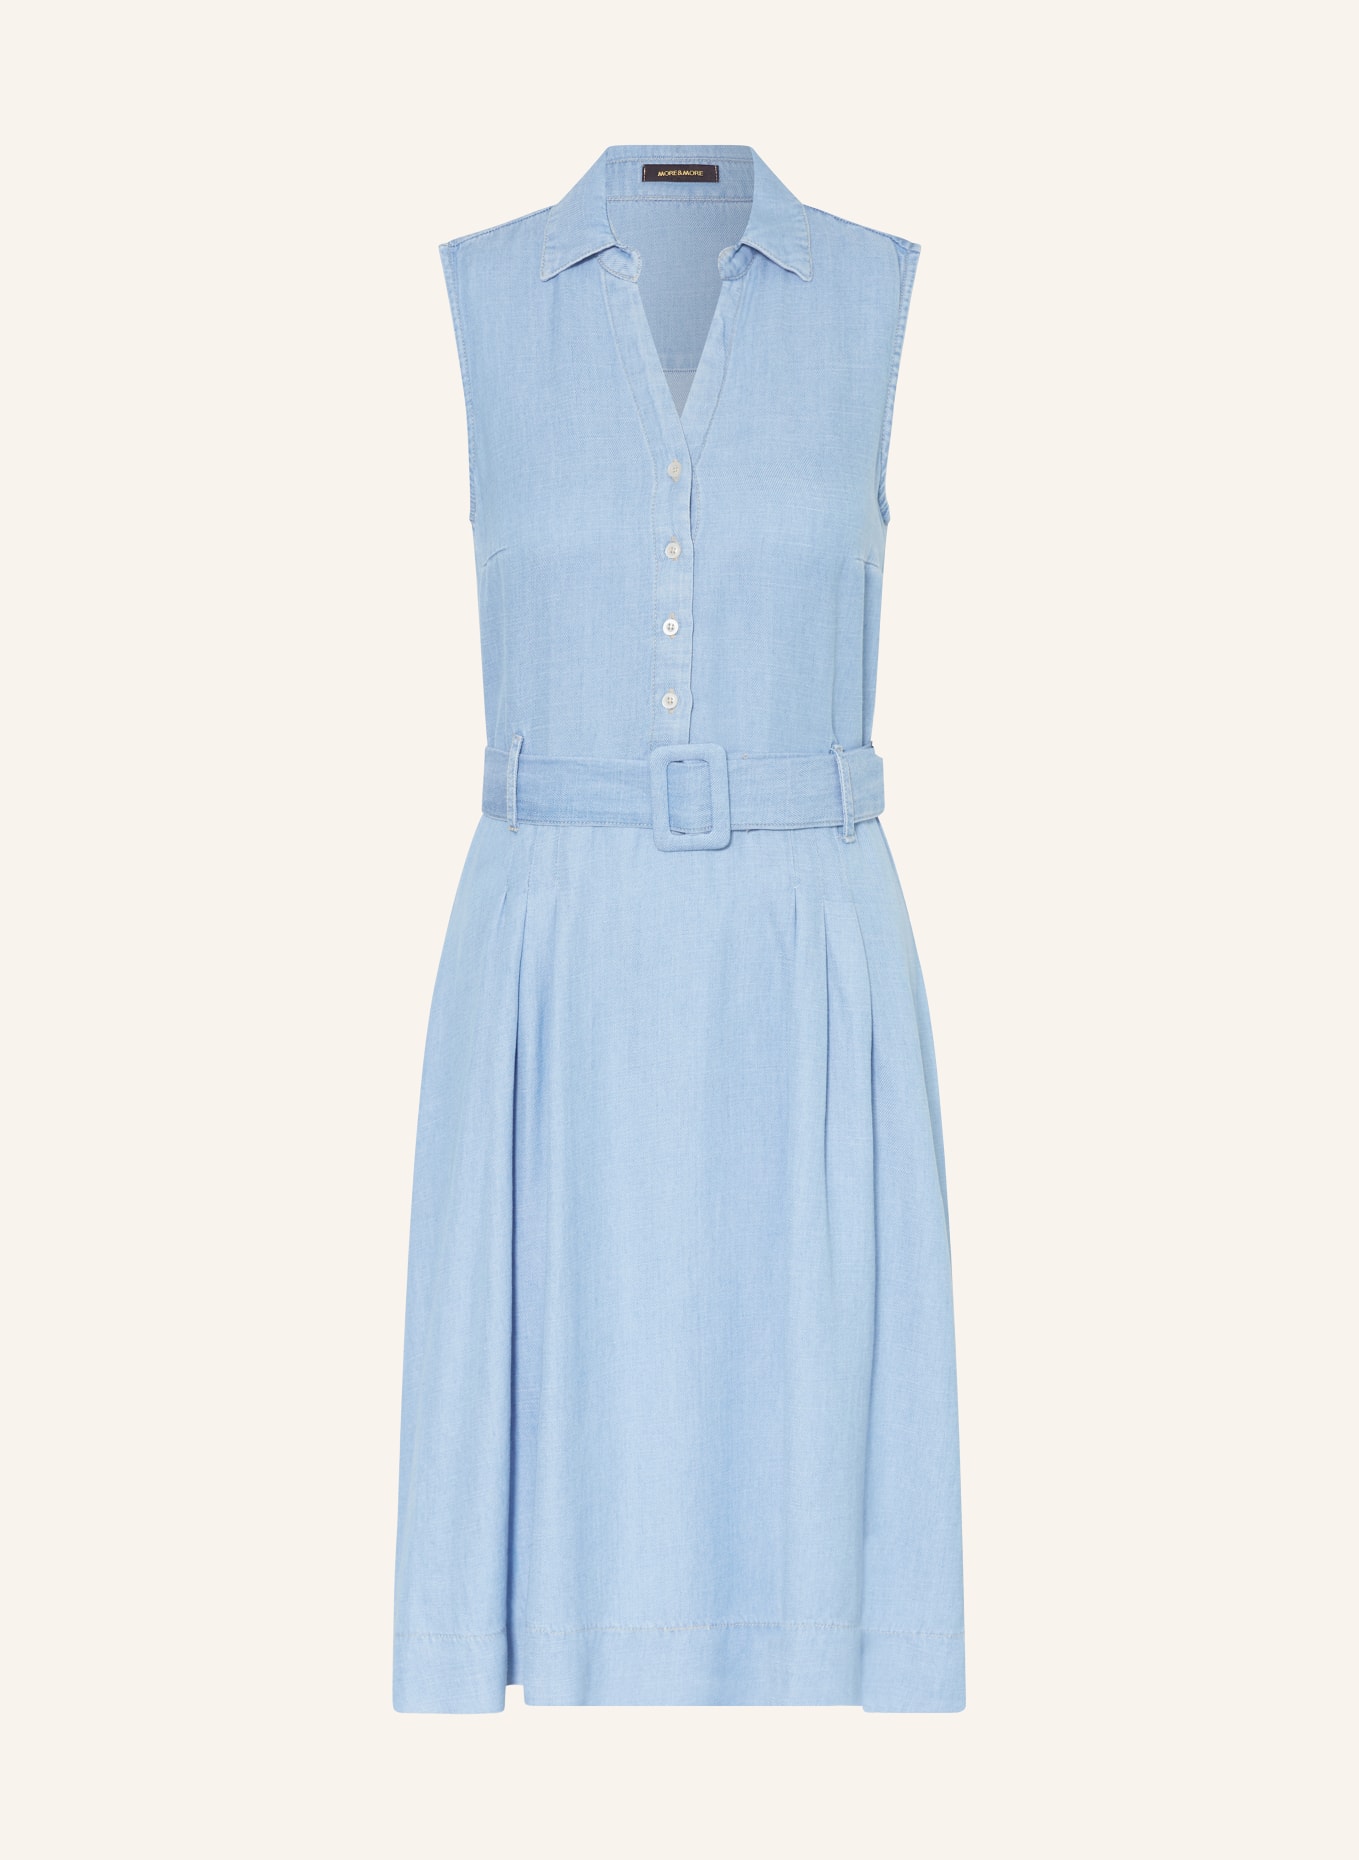 MORE & MORE Kleid in Jeansoptik, Farbe: HELLBLAU (Bild 1)